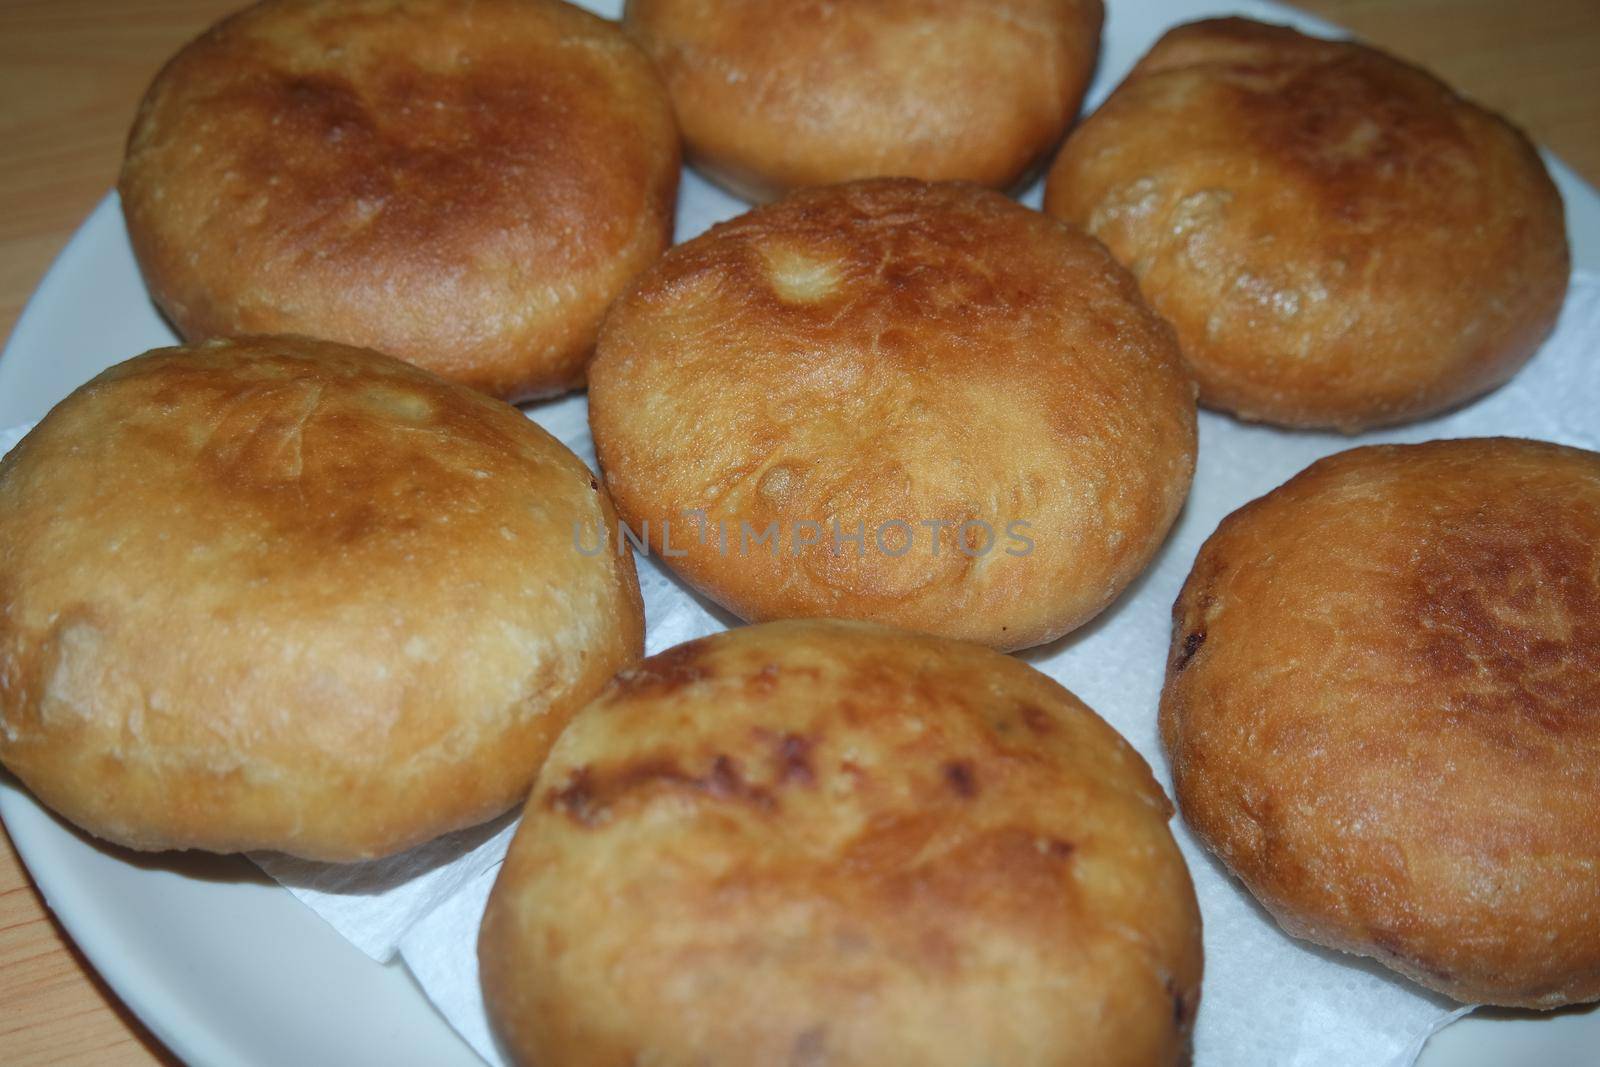 Homemade tasty potato bread rolls bun by Photochowk